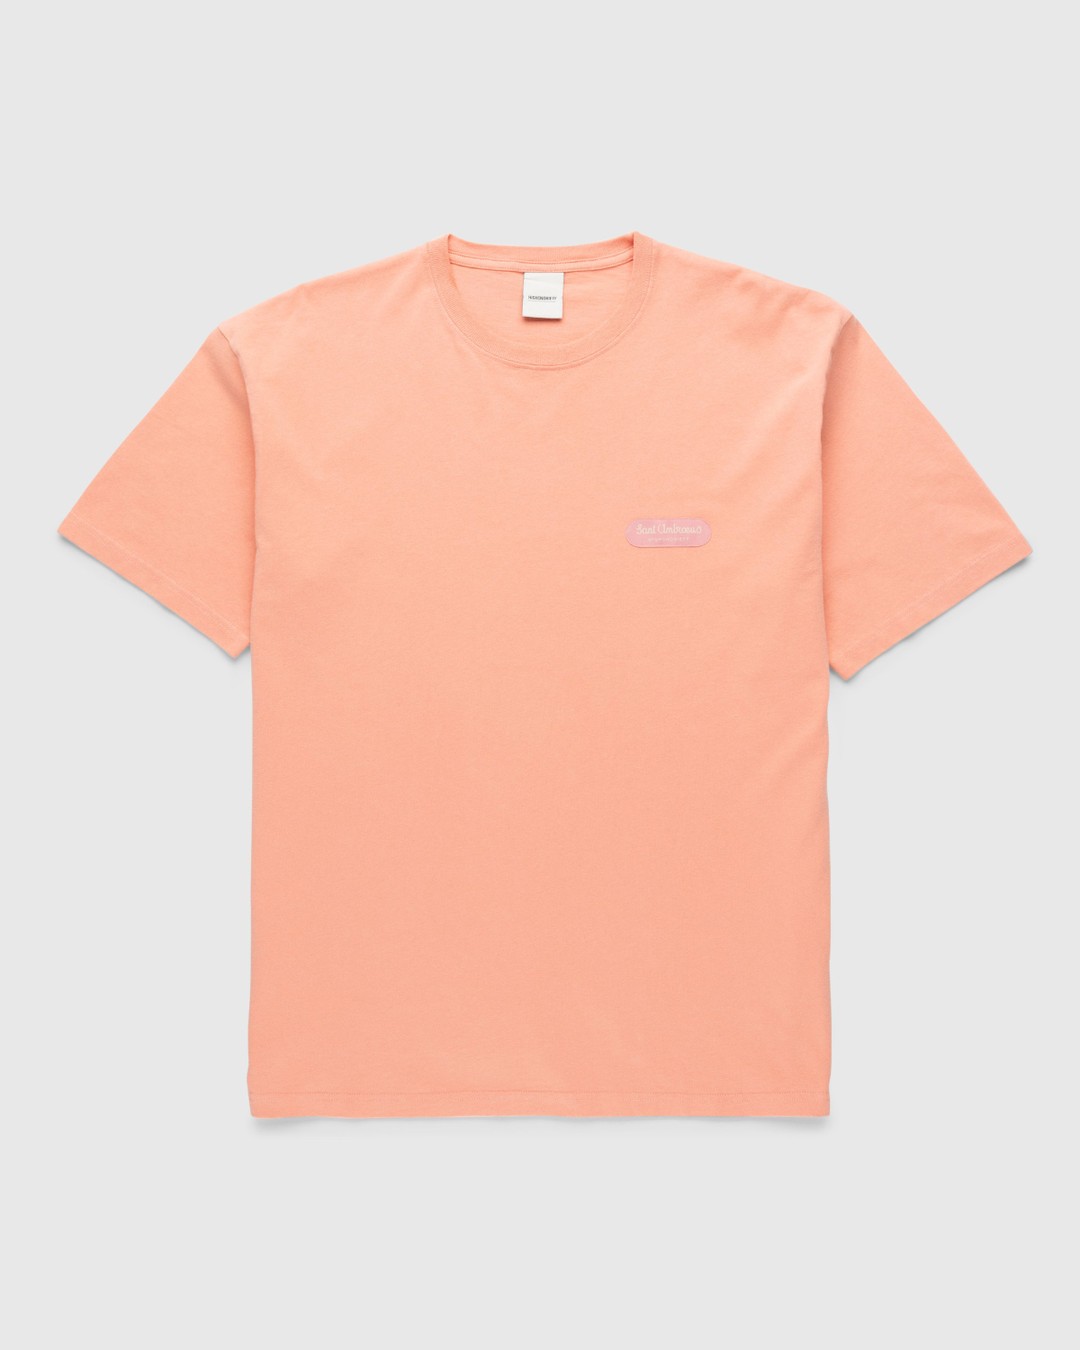 Highsnobiety x Sant Ambroeus – Pink T-Shirt | Highsnobiety Shop